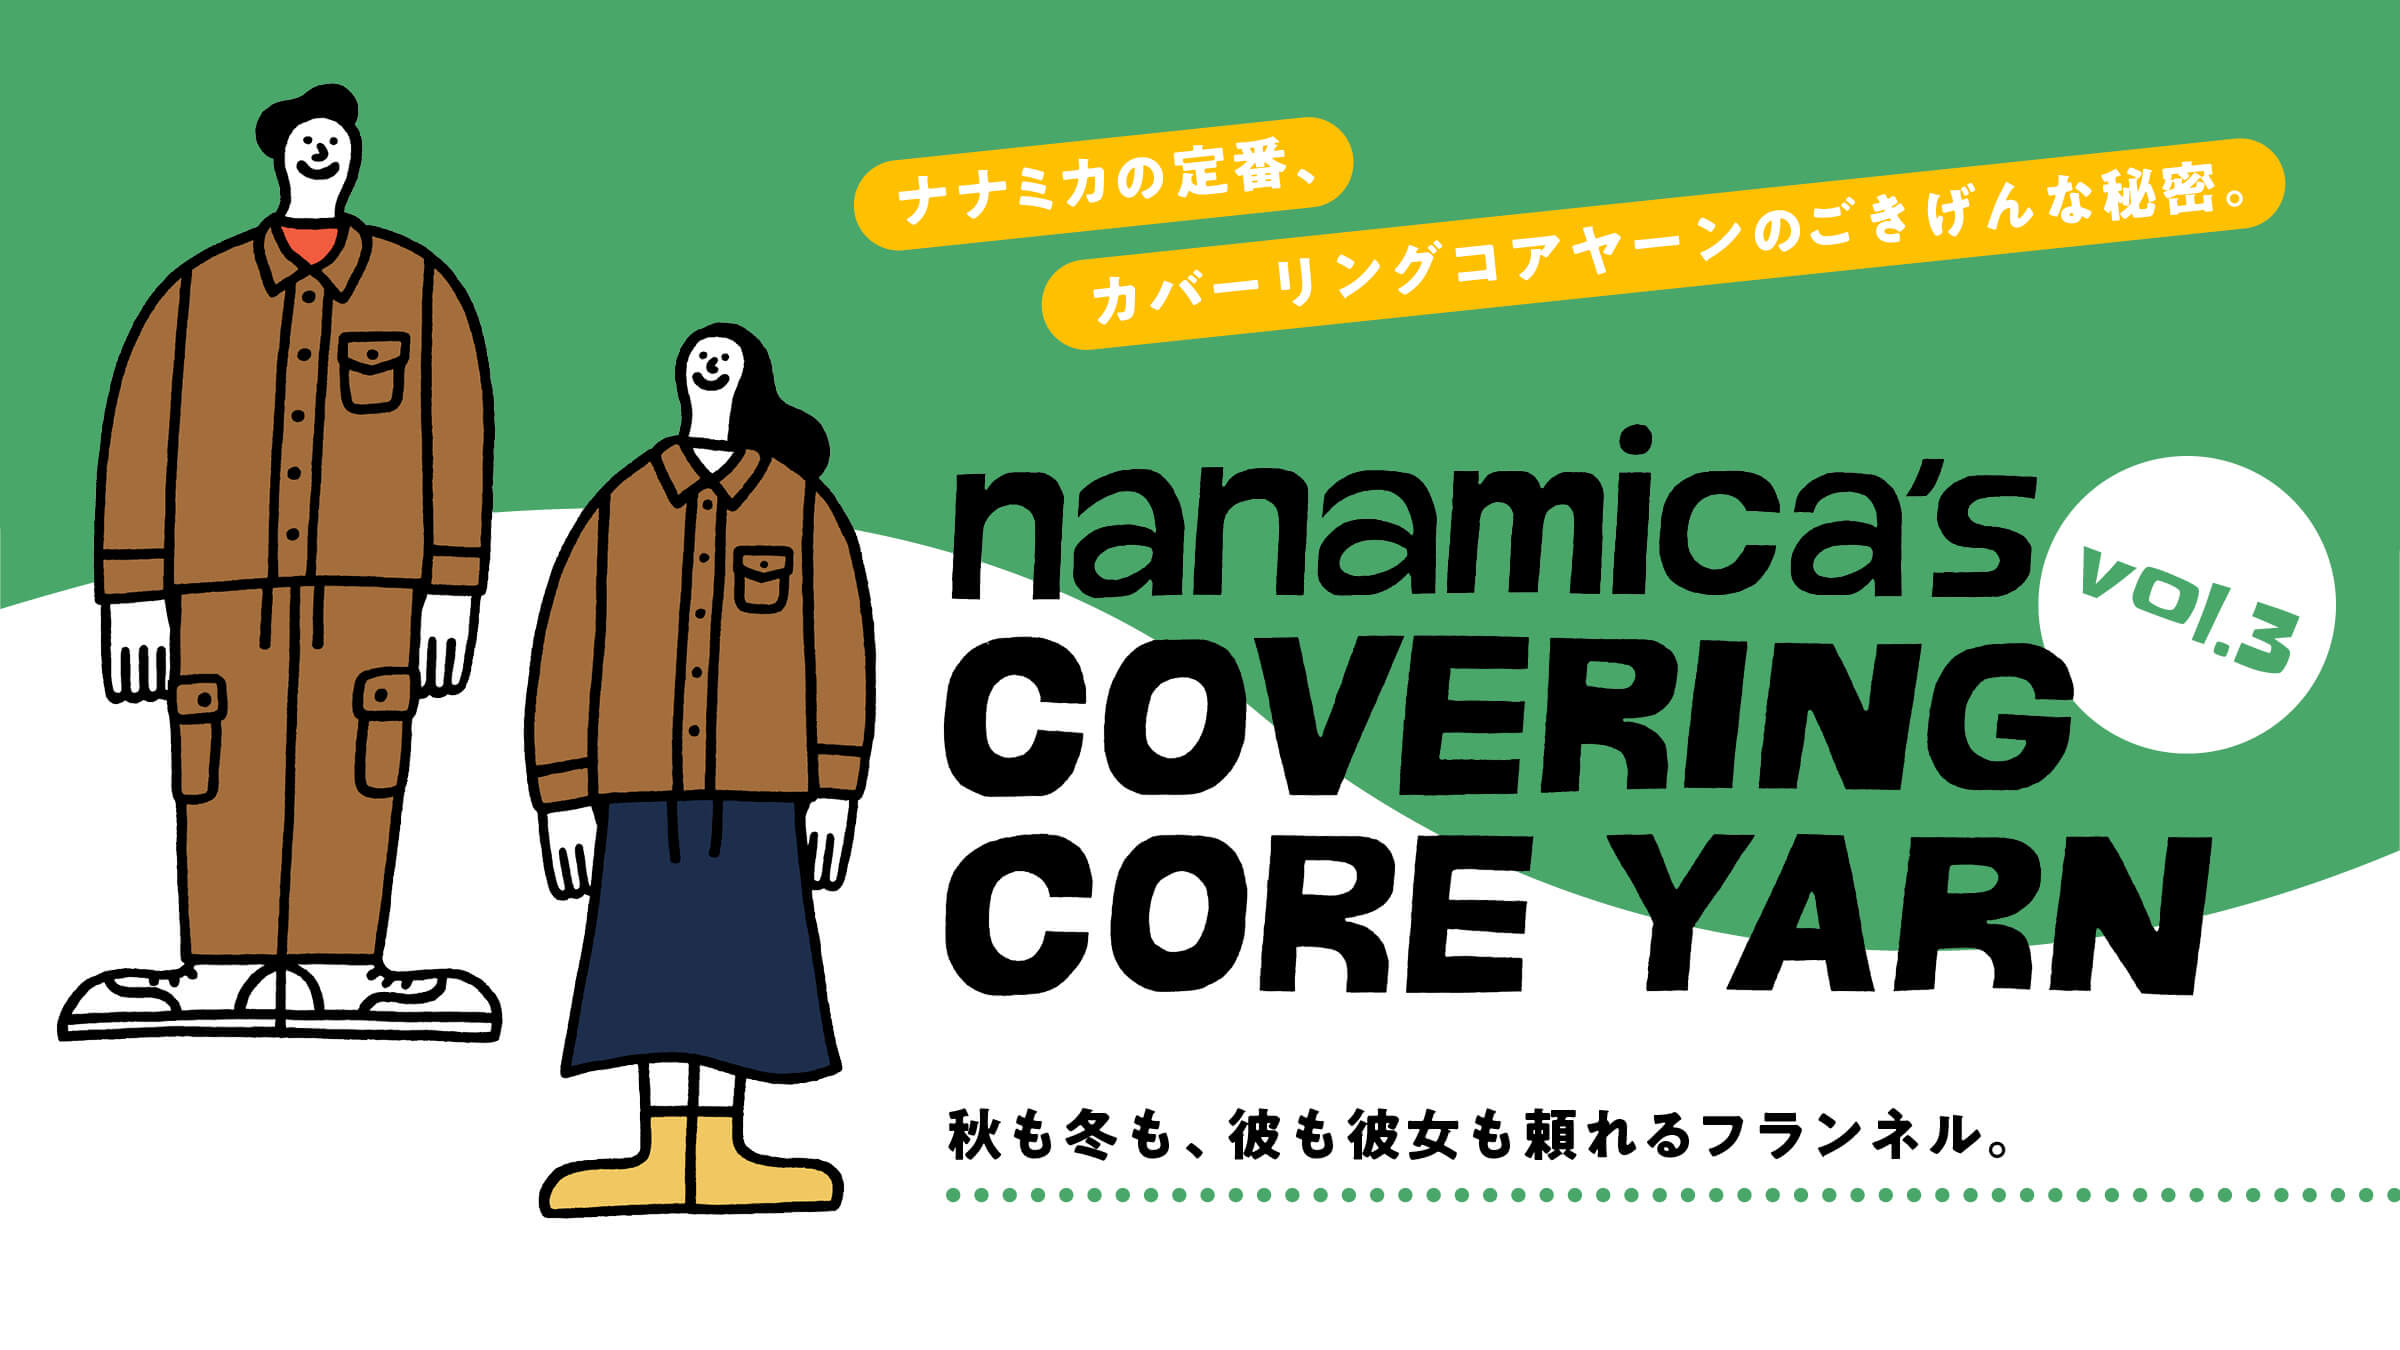 nanamica’s COVERING CORE YARN ナナミカの定番、カバーリングコアヤーンのごきげんな秘密。vol.3 秋も冬も、彼も彼女も頼れるフランネル。